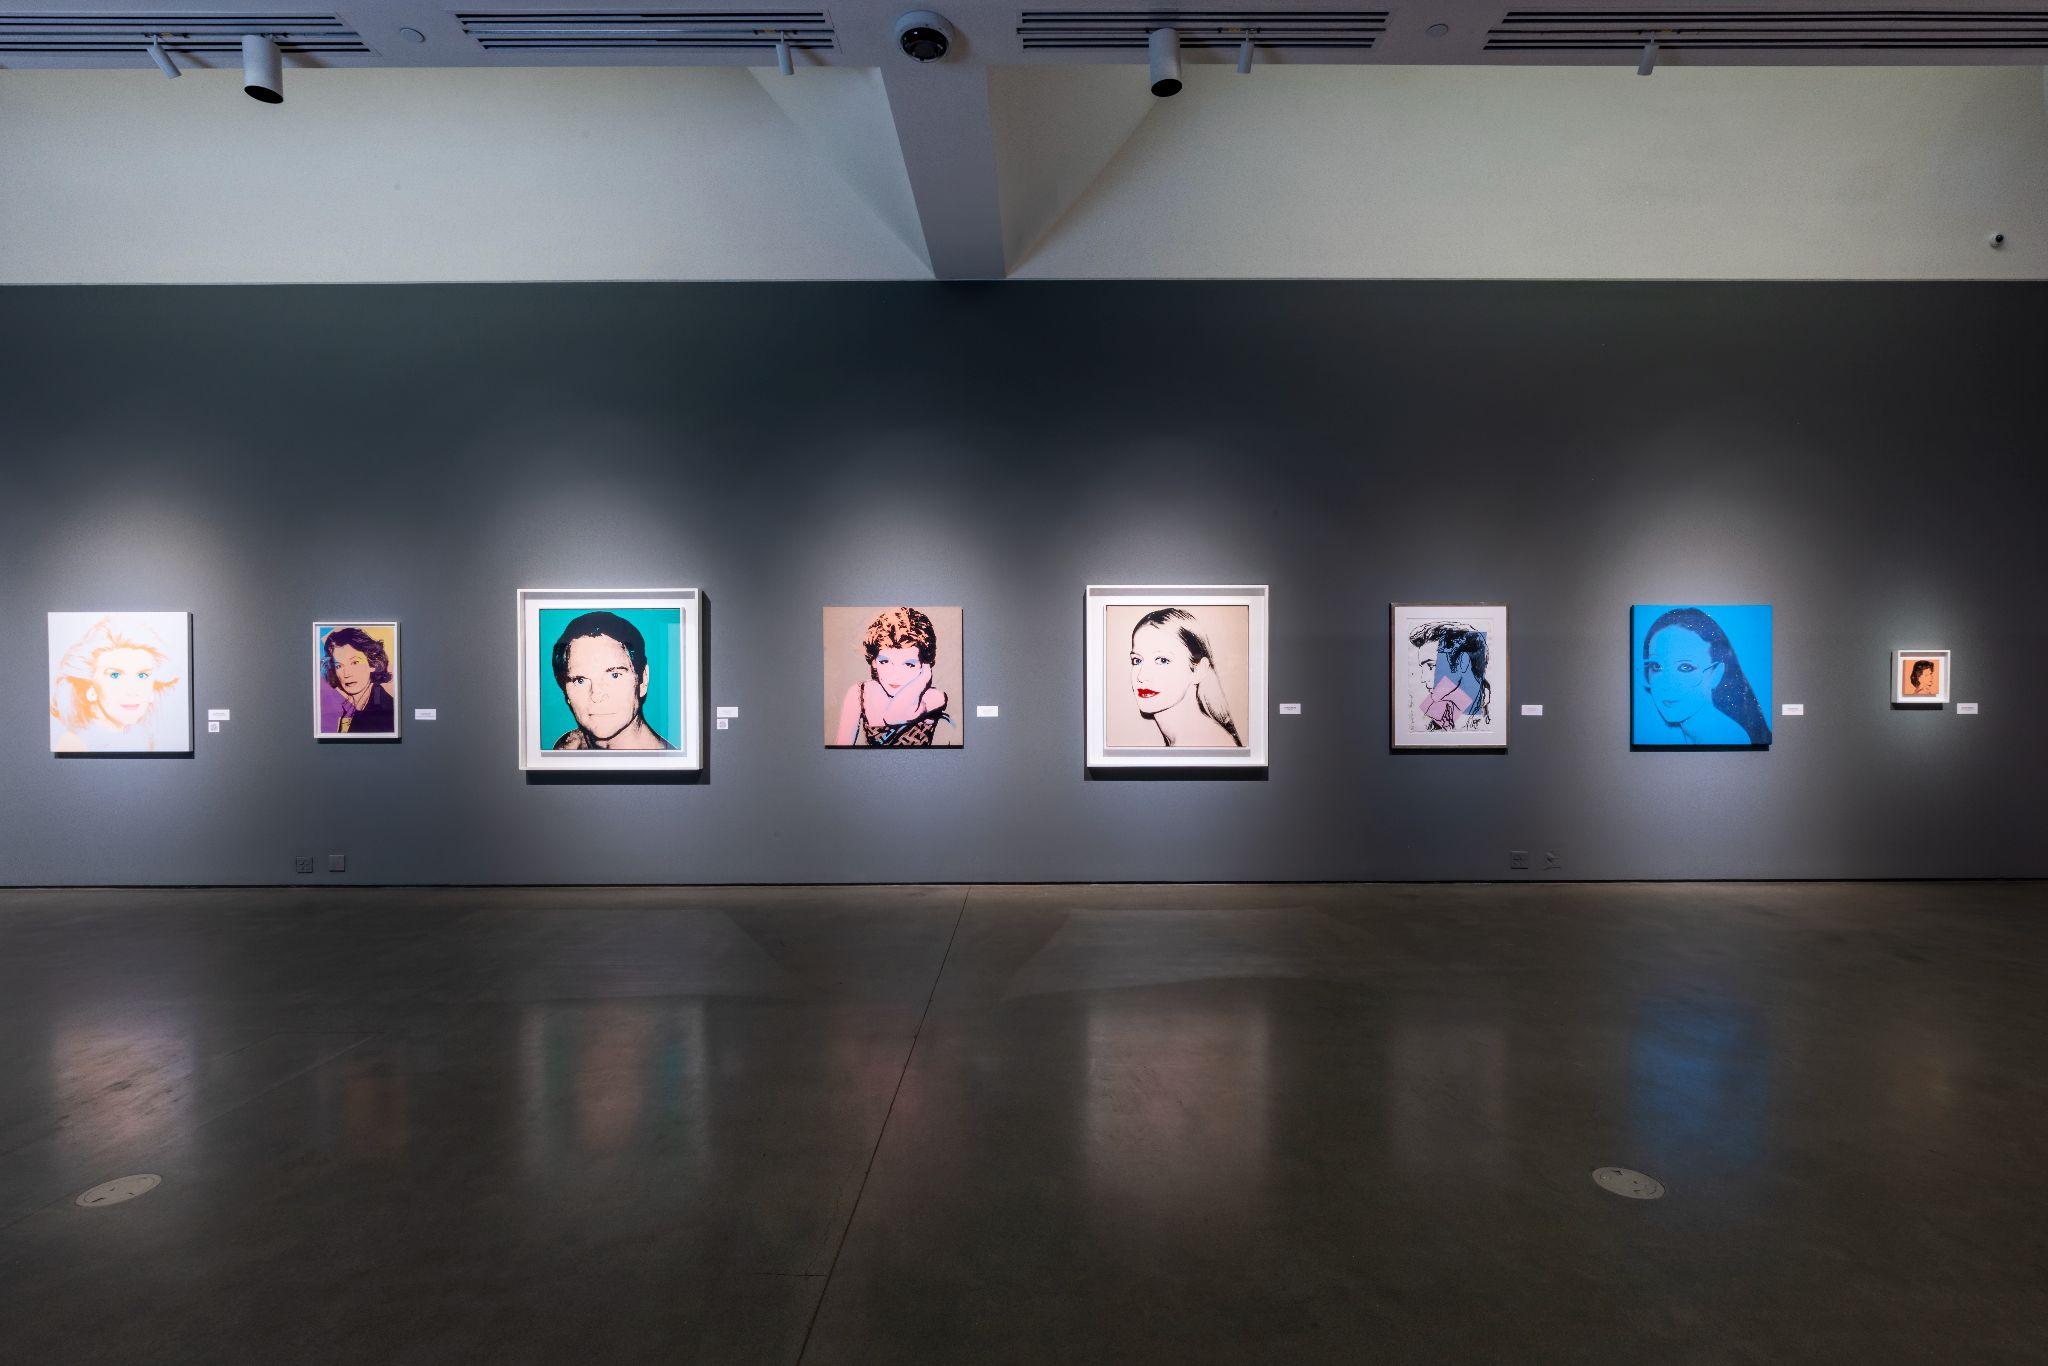 Andy Warhol silkscreens